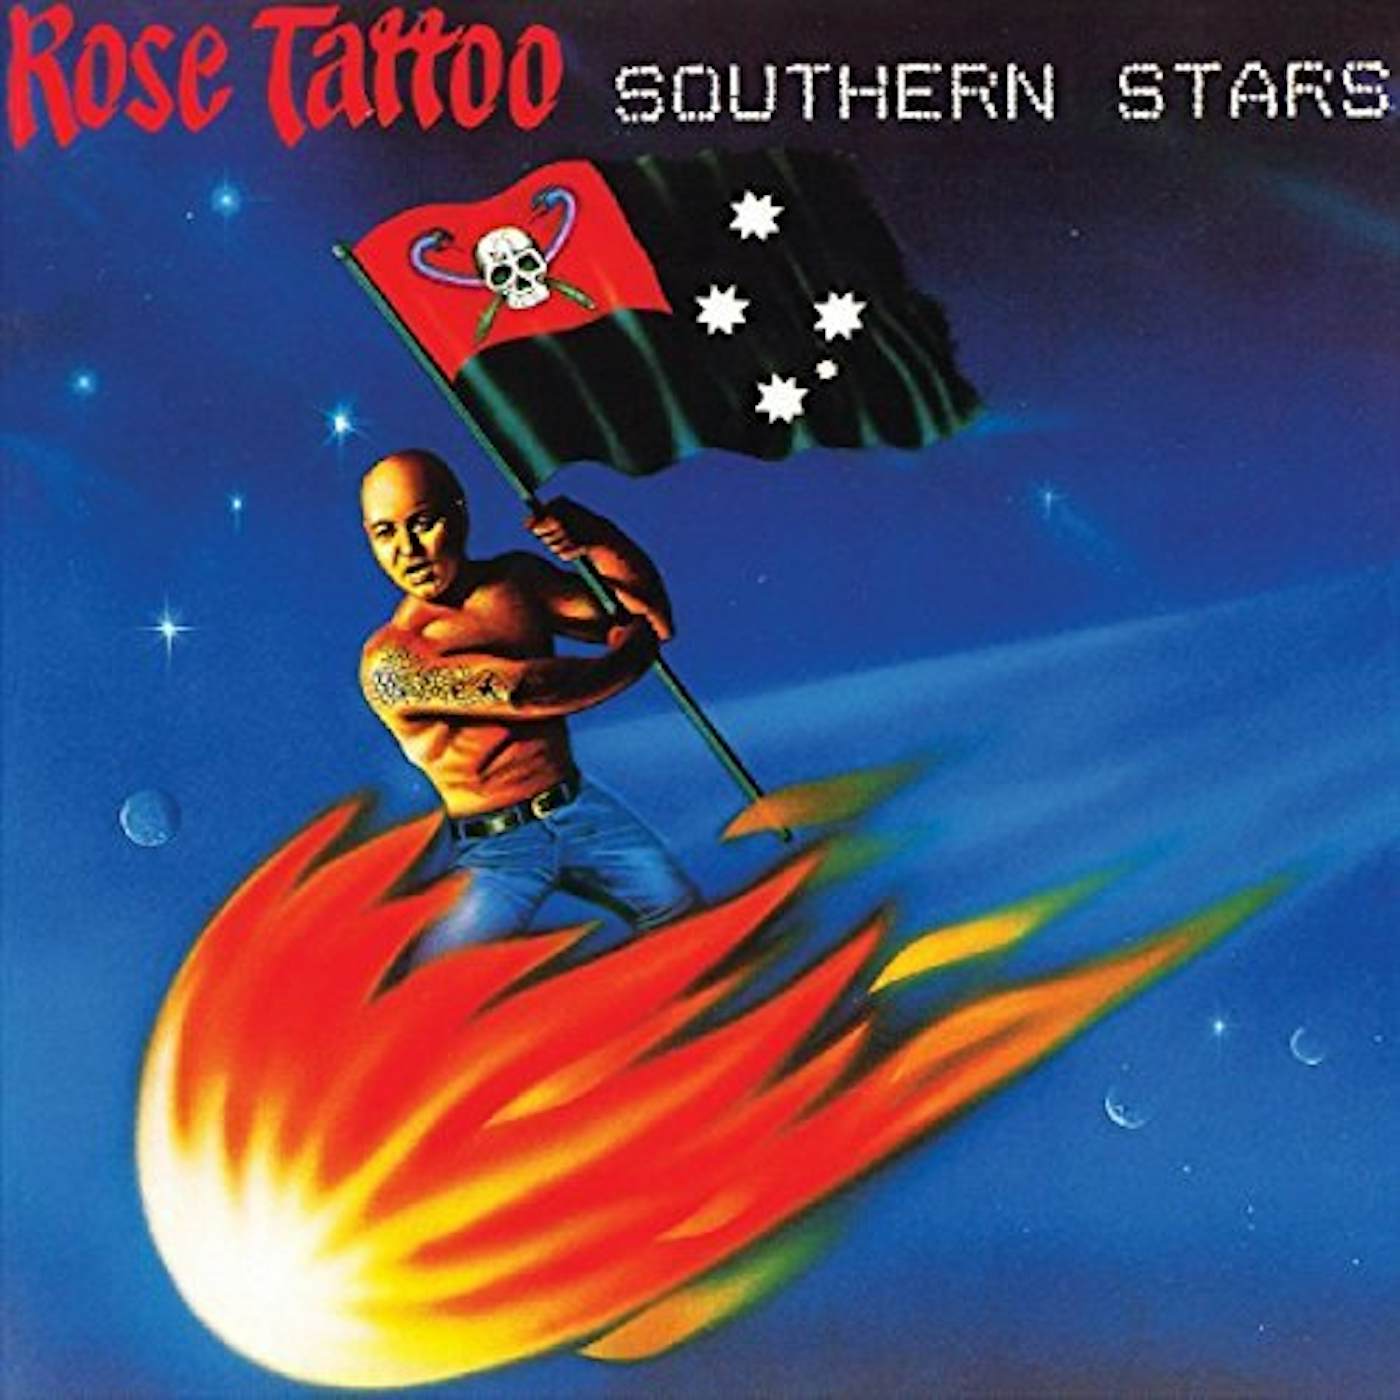 Rose Tattoo SOUTHERN STARS CD